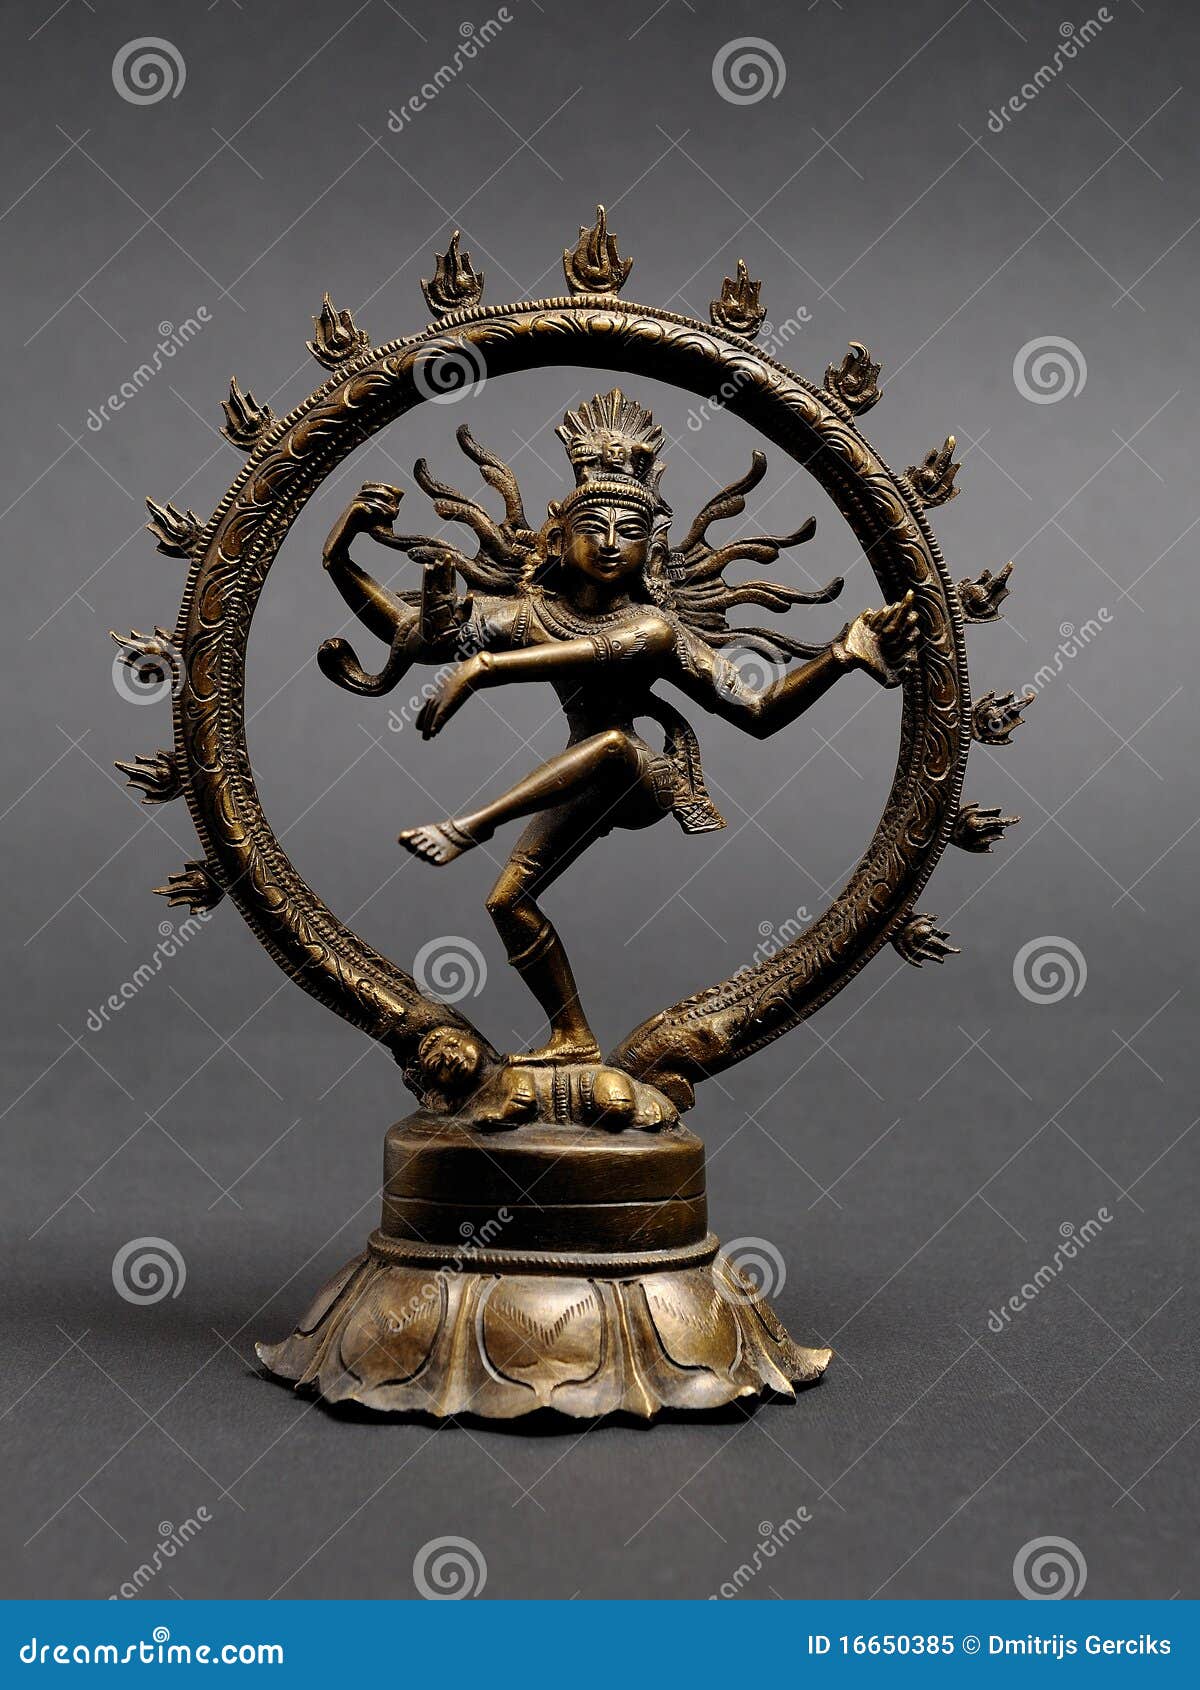 Dancing Shiva Statue For Sale